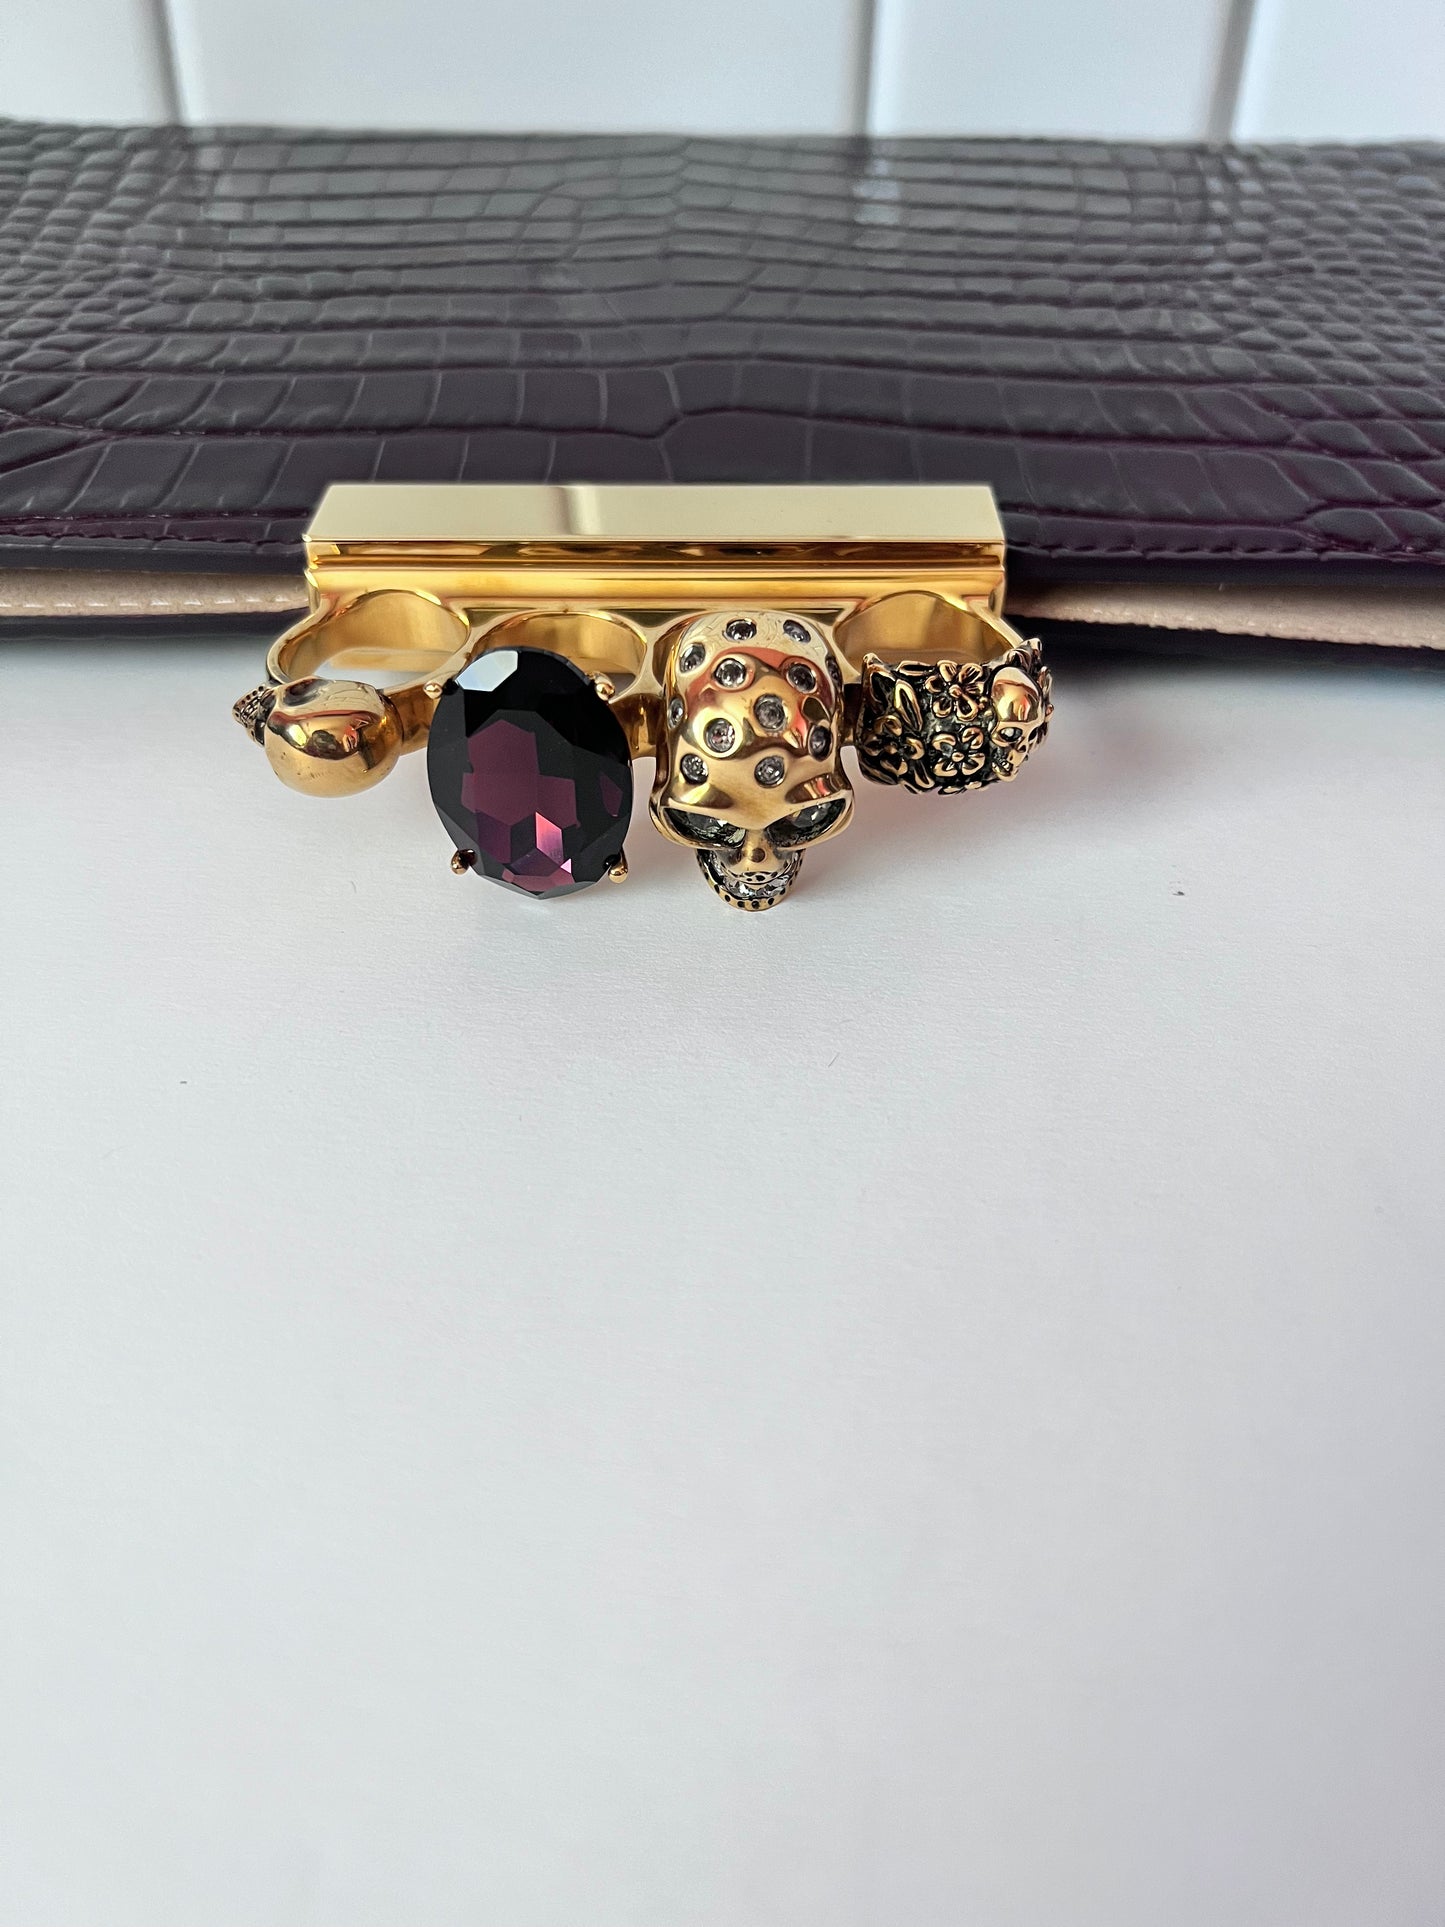 Alexander McQueen Jeweled Knuckle Clutch (new)